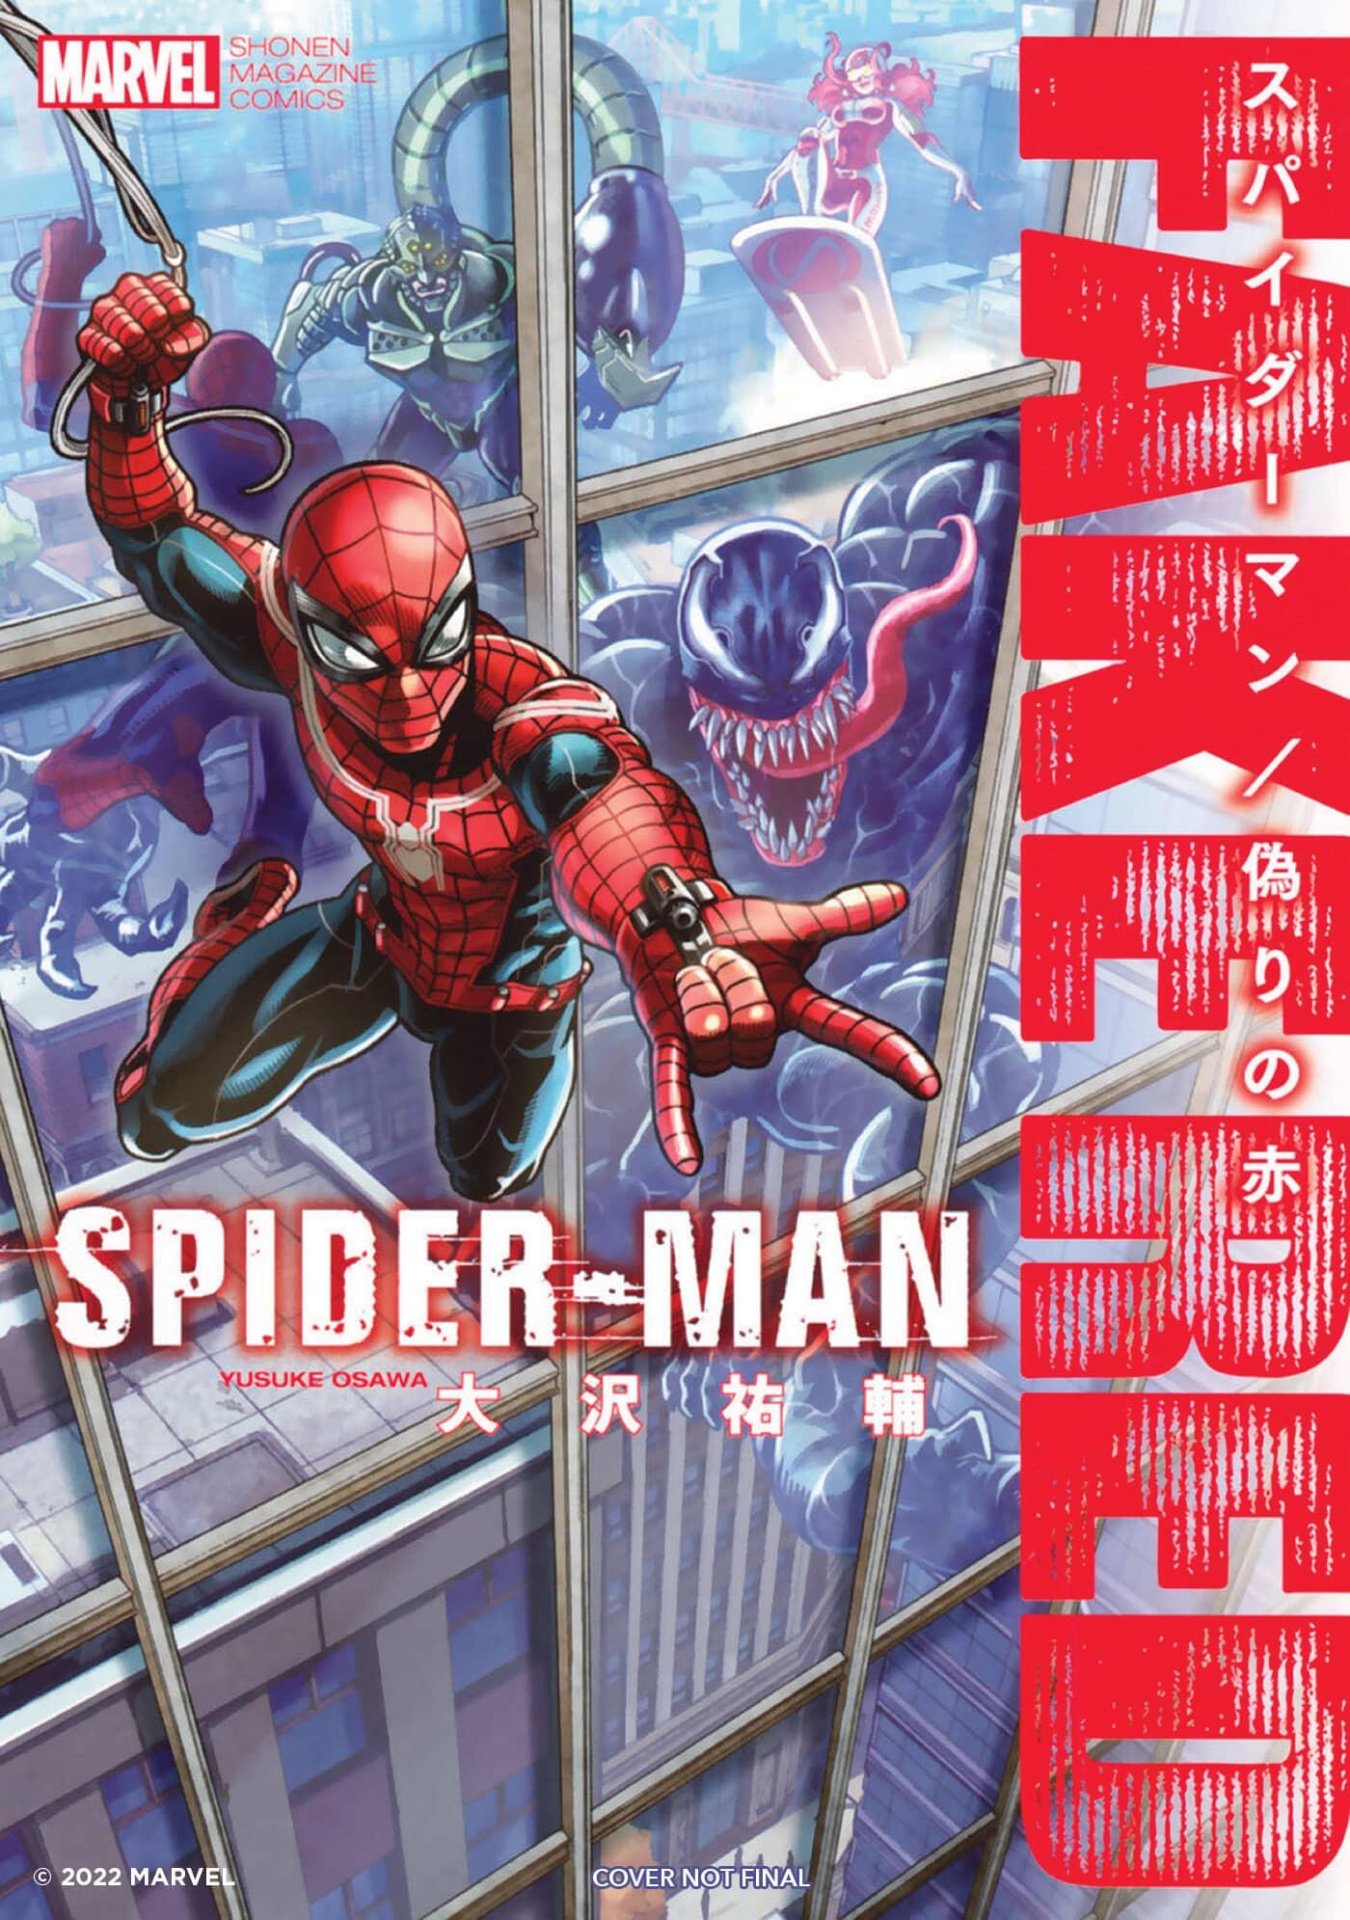 Spider-Man: cubierta roja falsa